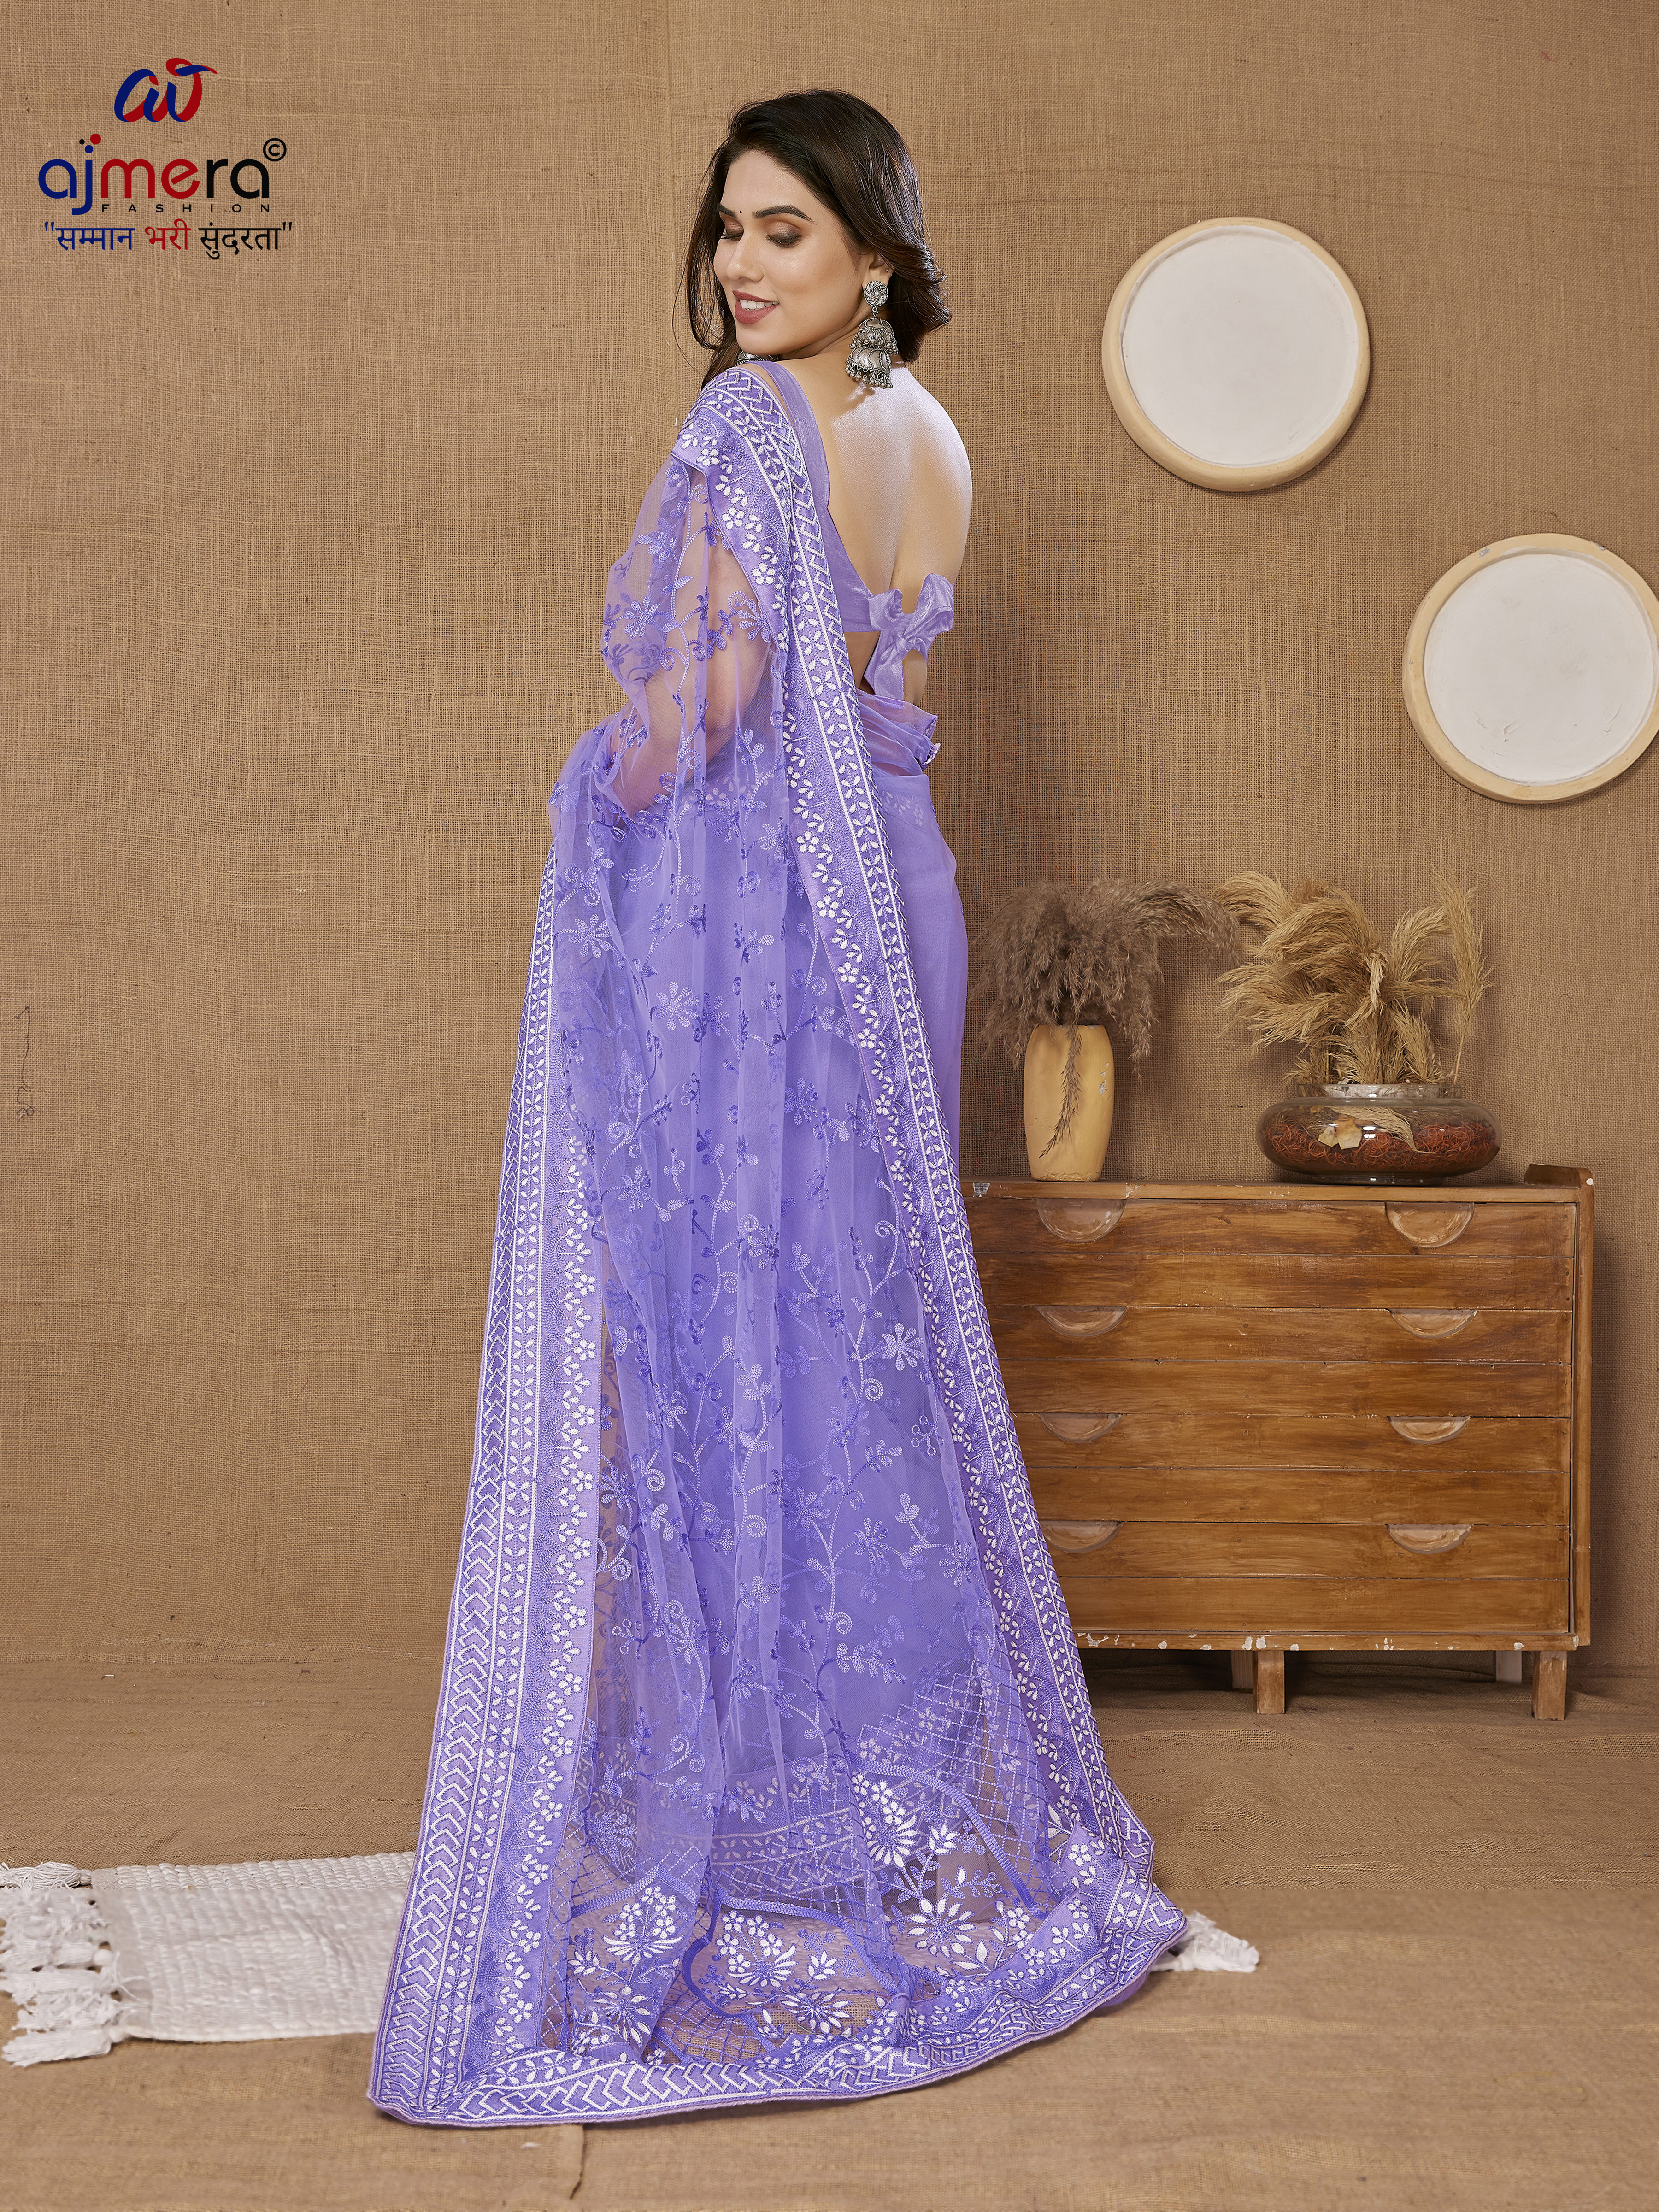 Attractive Look Saree in Fine Colored Manufacturers, Suppliers in Gurugram